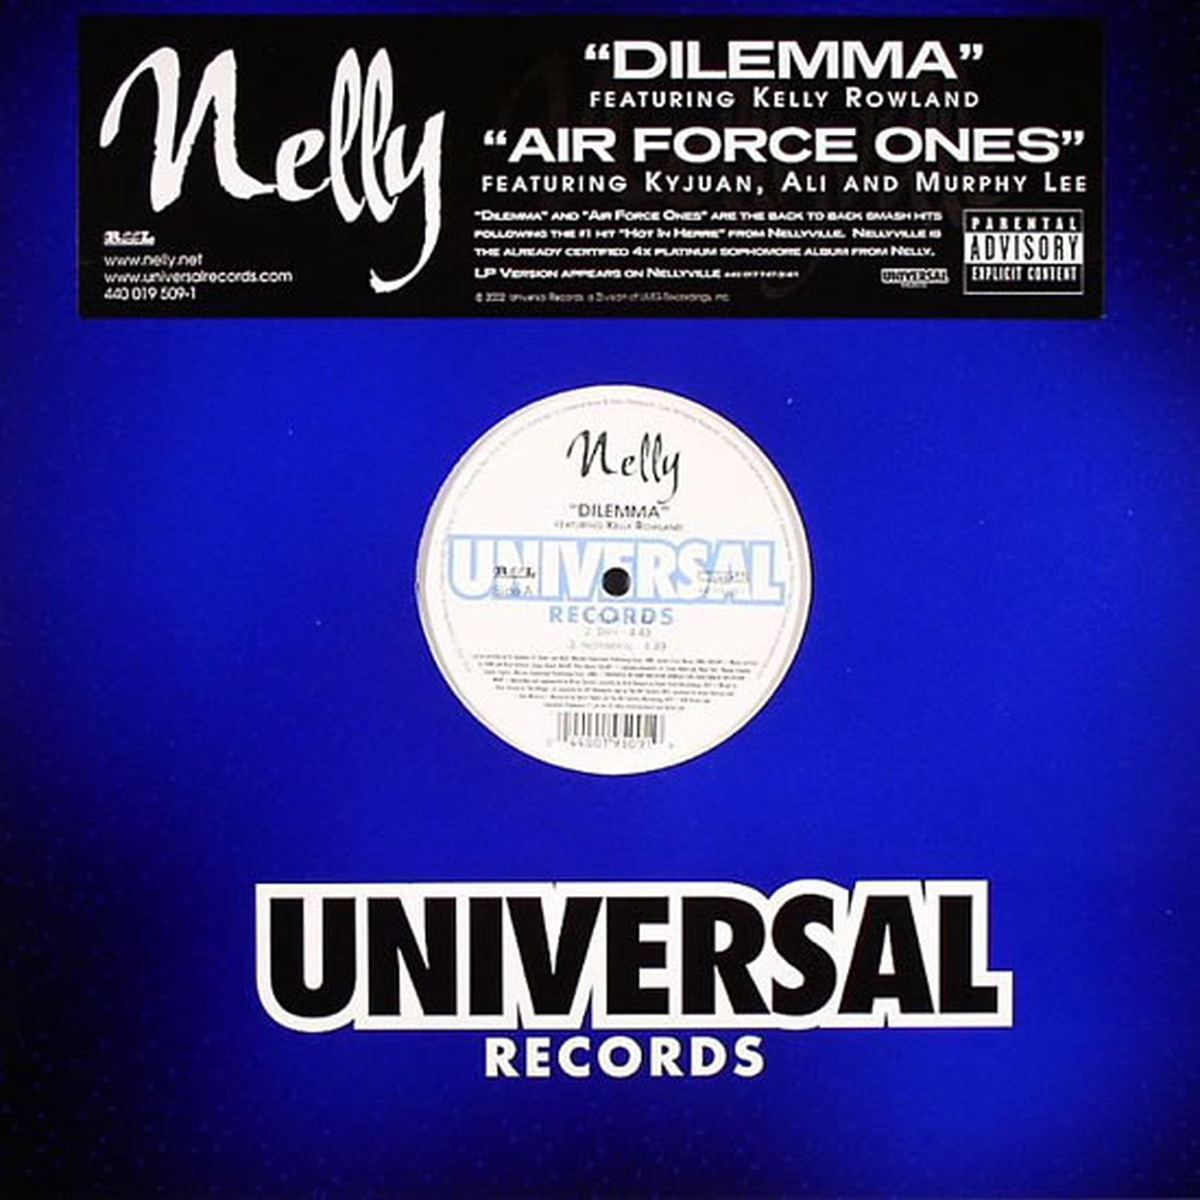 Nelly Dilemma. Dilemma Nelly feat Kelly Rowland. Nelly feat. Kelly Rowland. Dilemma feat kelly rowland